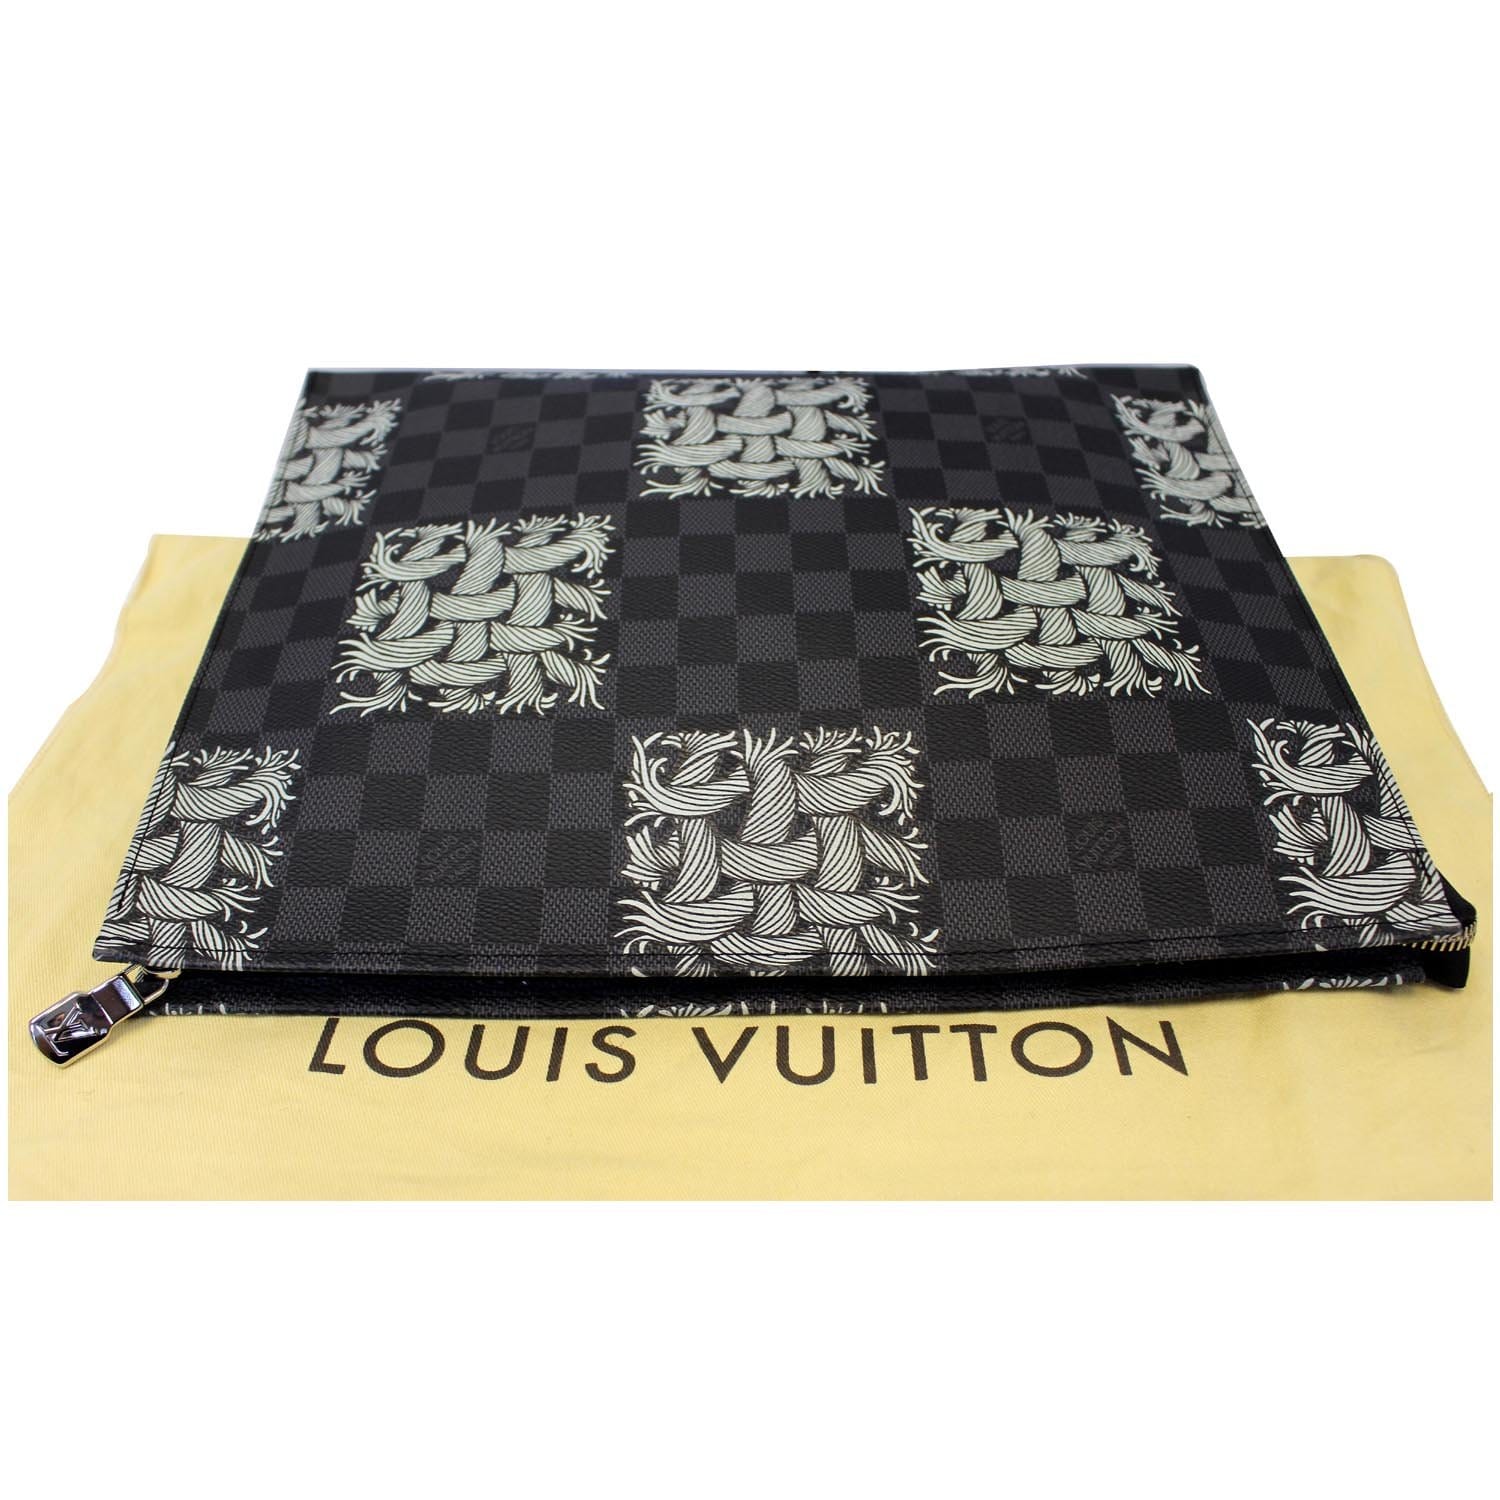 Louis Vuitton Louis Vuitton Damier graphite clutch Christopher Nemeth, tamayaku